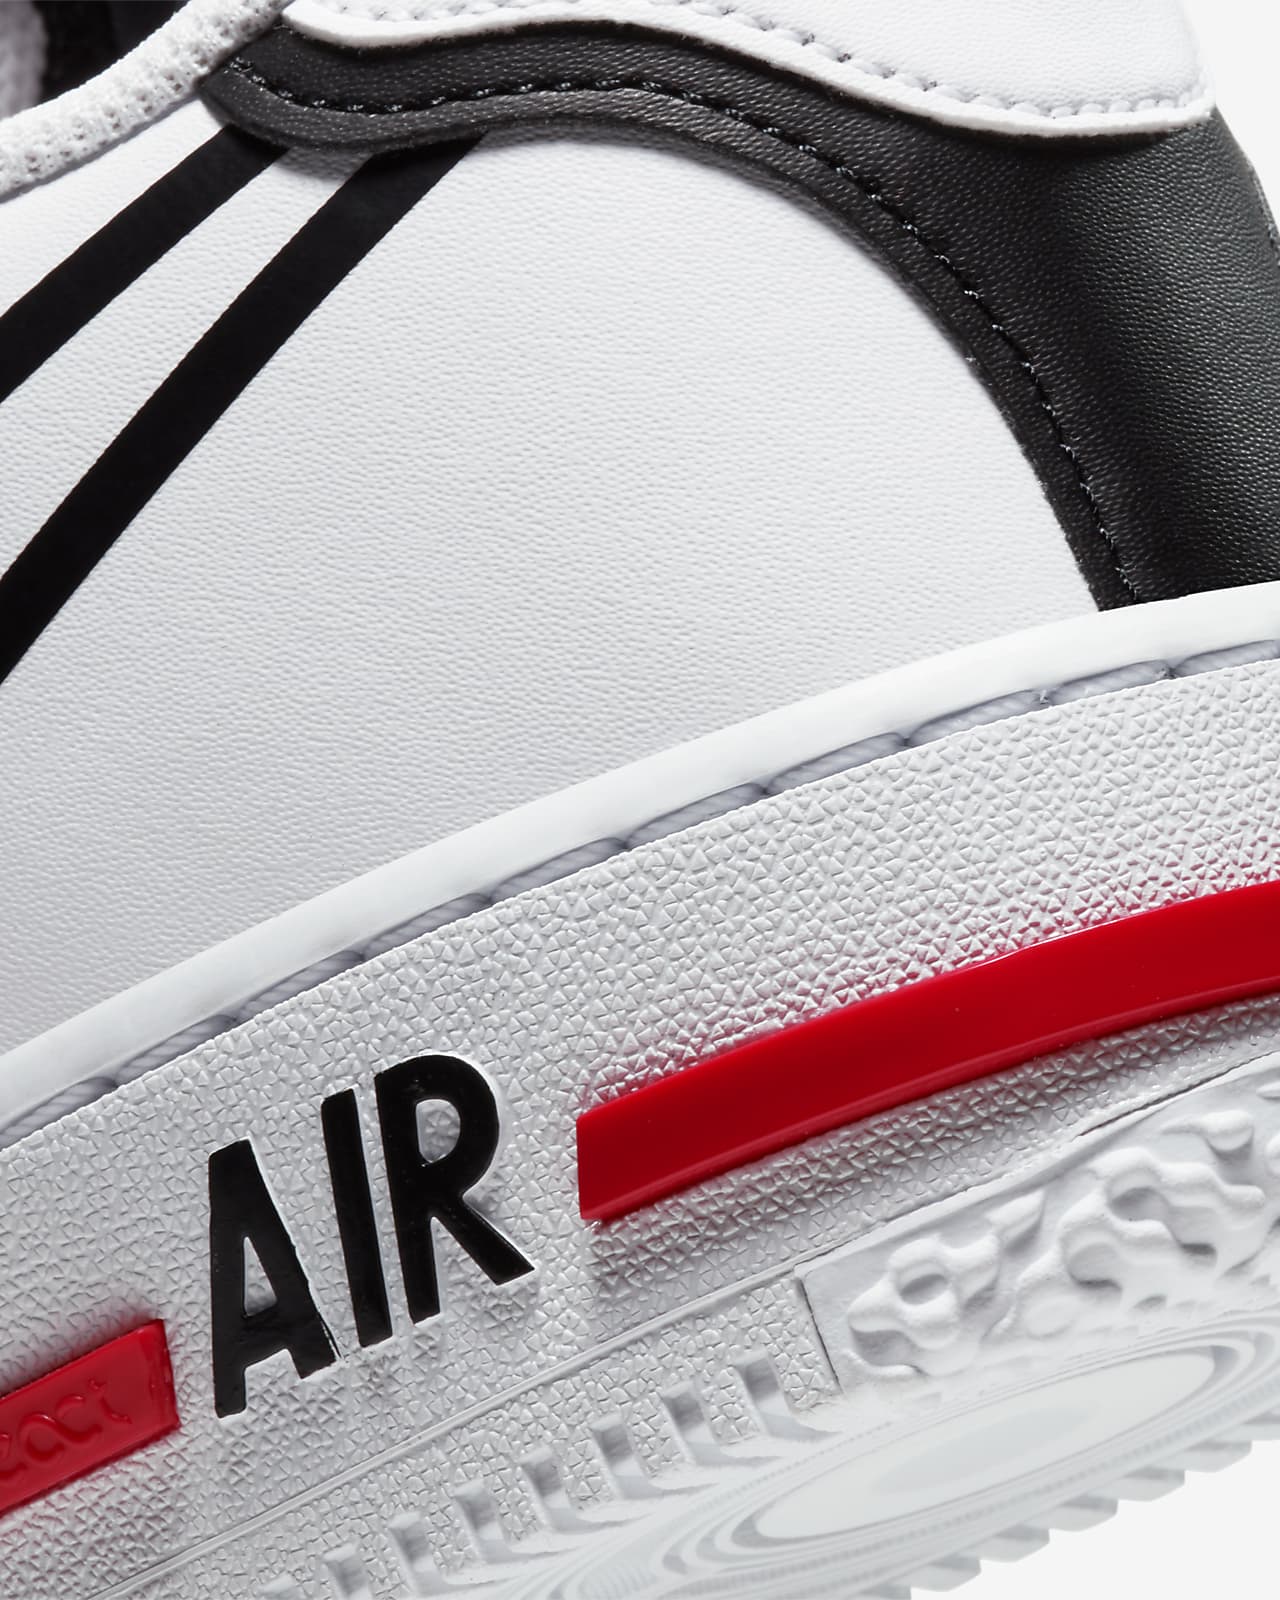 Nike Air Force 1 React Black/Black/White Men's Shoes, Size: 13